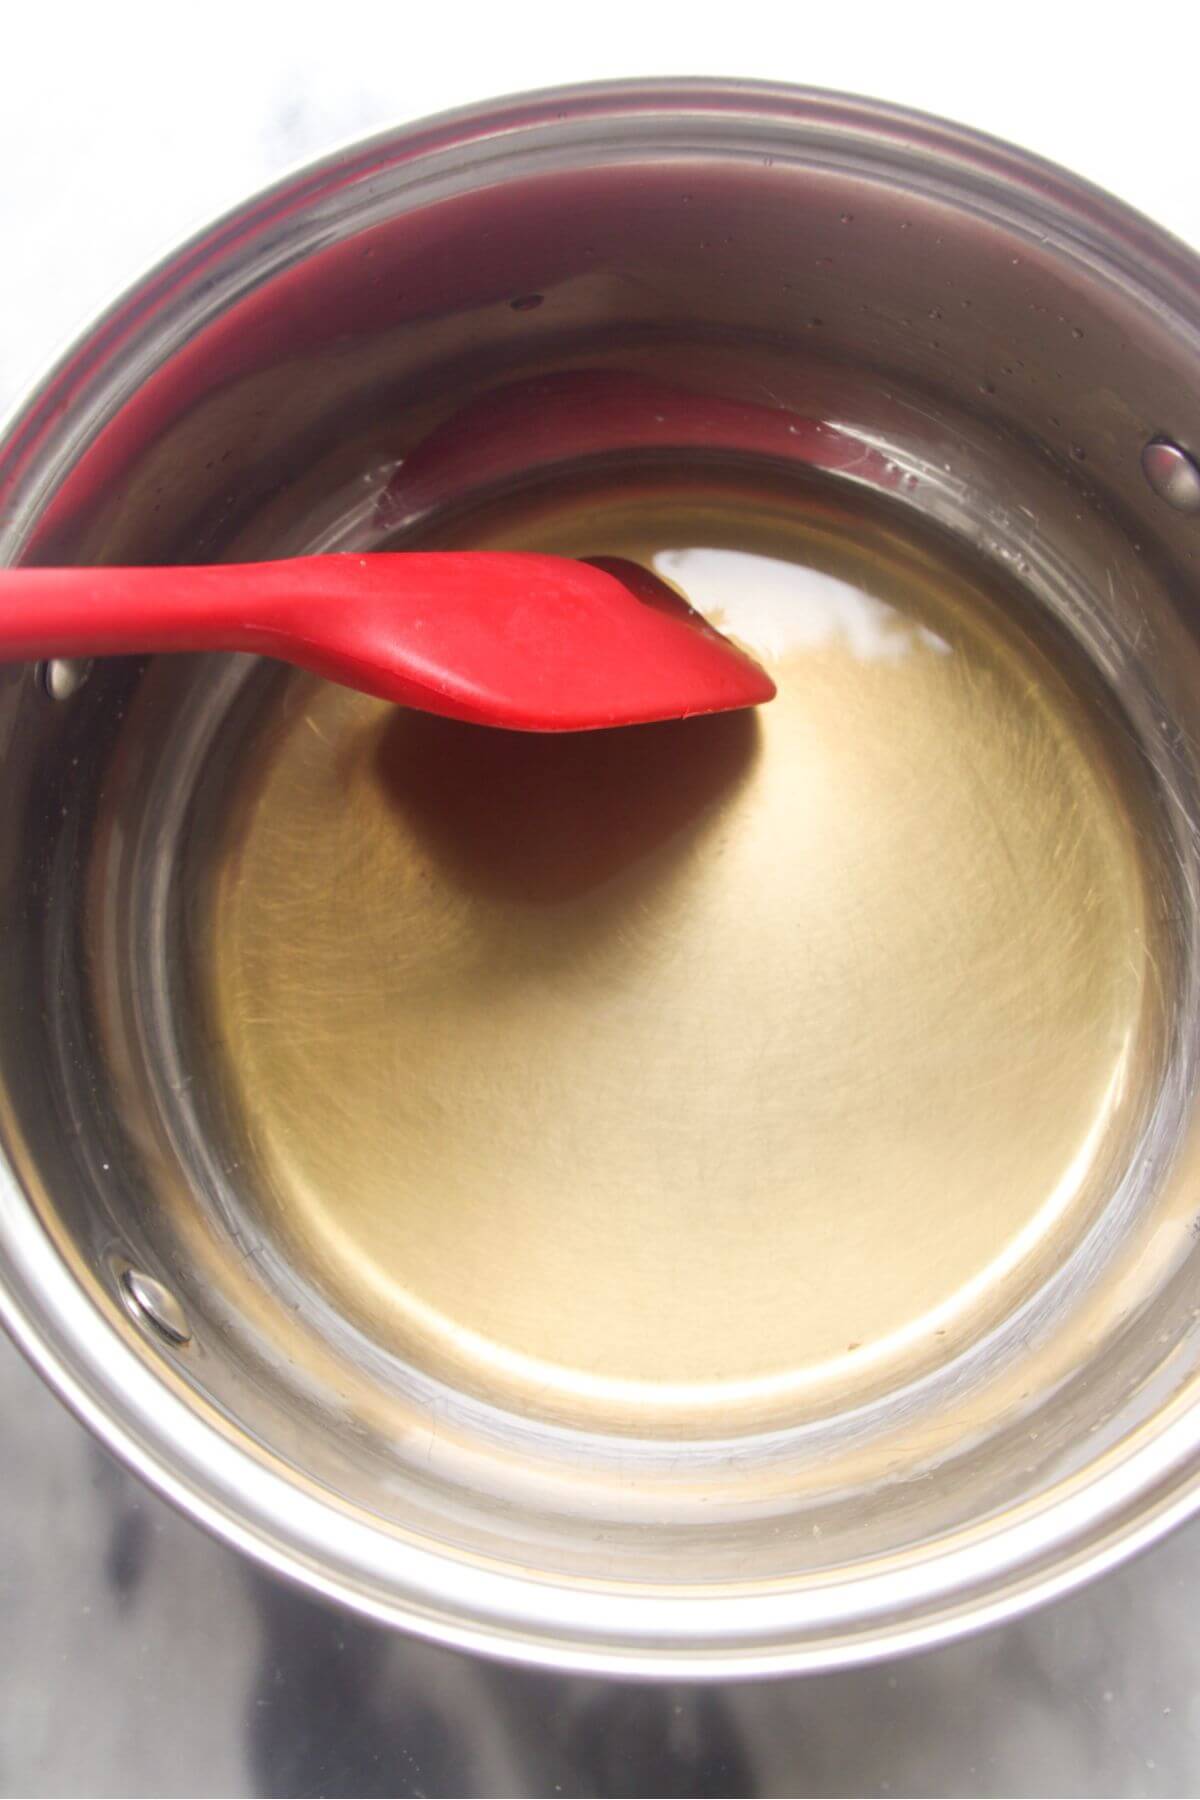 Small red spatula stirring sugar syrup in a small silver pot.